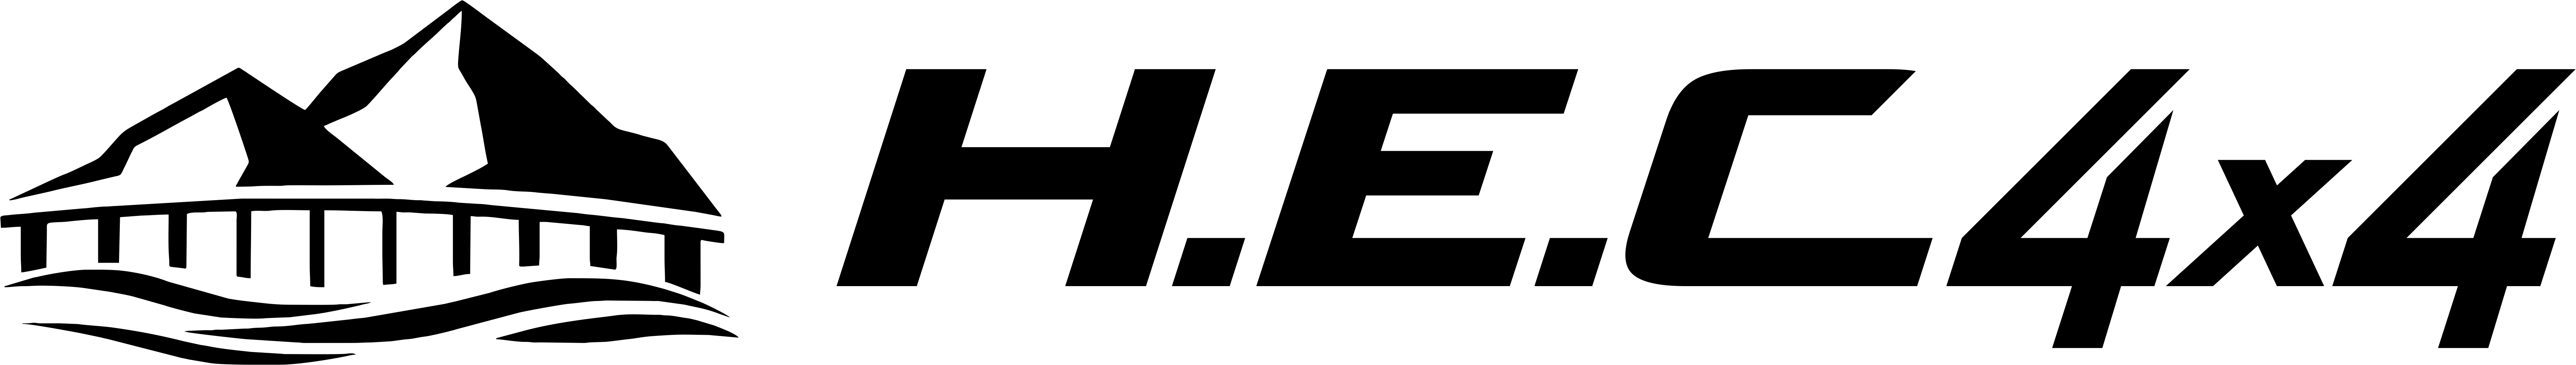 Company logo of Hunter East Coast 4x4